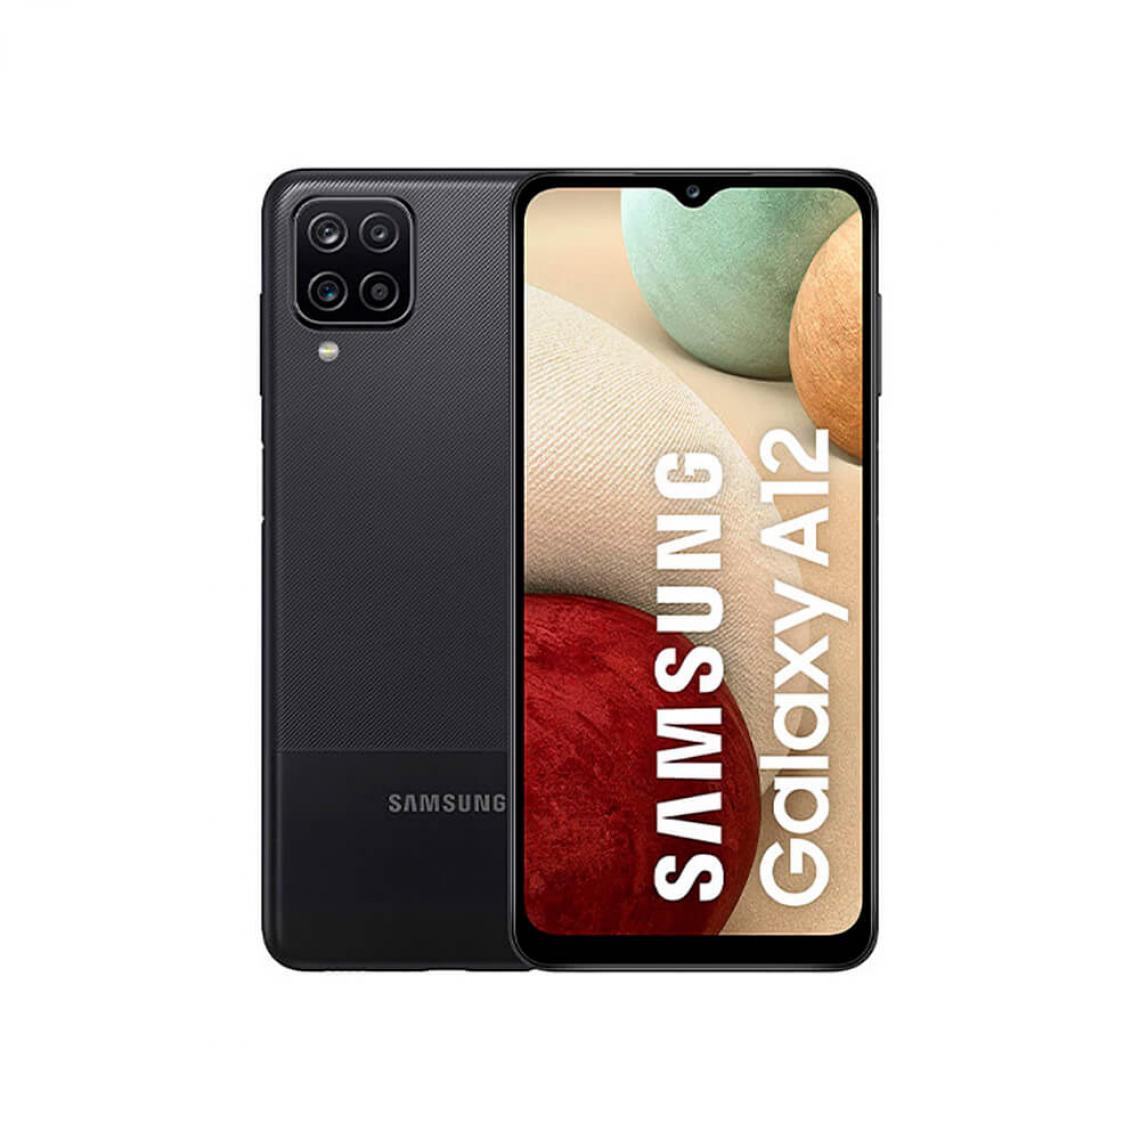 Samsung - Samsung Galaxy A12 4 Go/64 Go Noir (Noir) Double SIM avec NFC SM-A127 - Smartphone Android